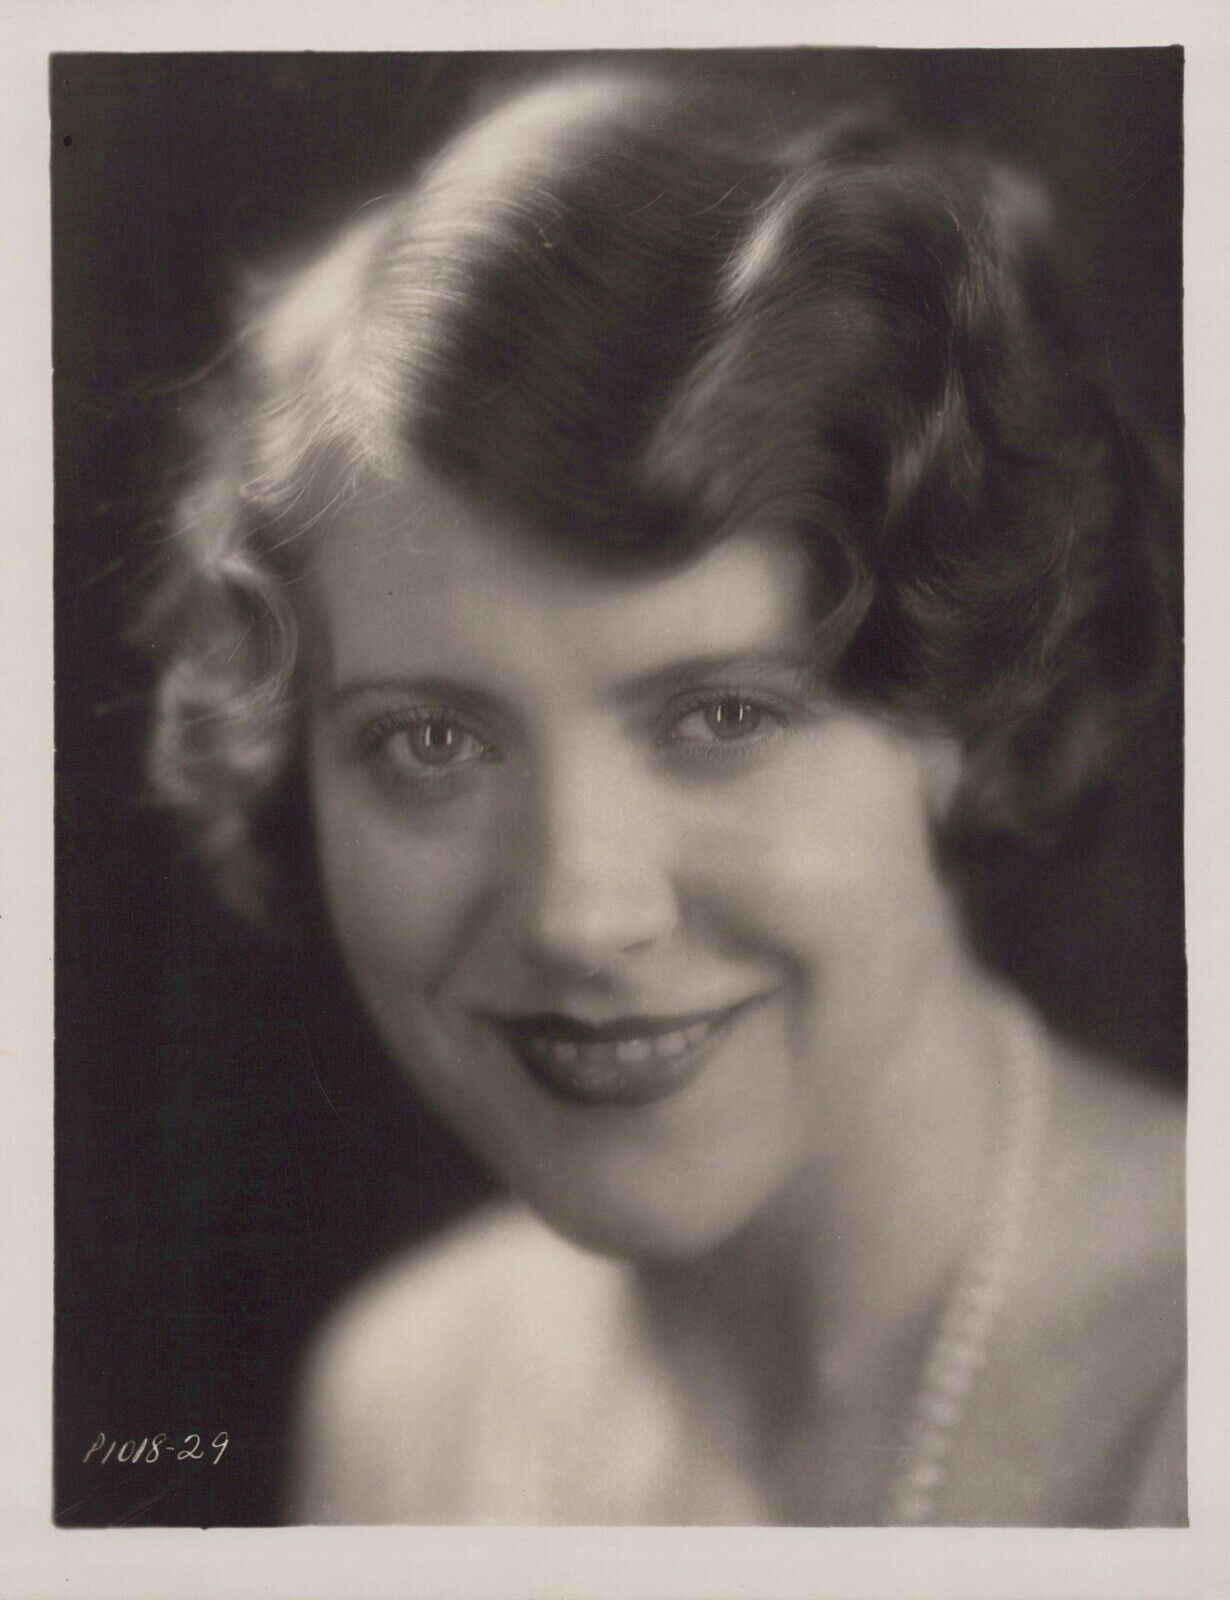 Ruth Chatterton (1930s) ❤ Stunning Portrait - Original Vintage Photo K 252